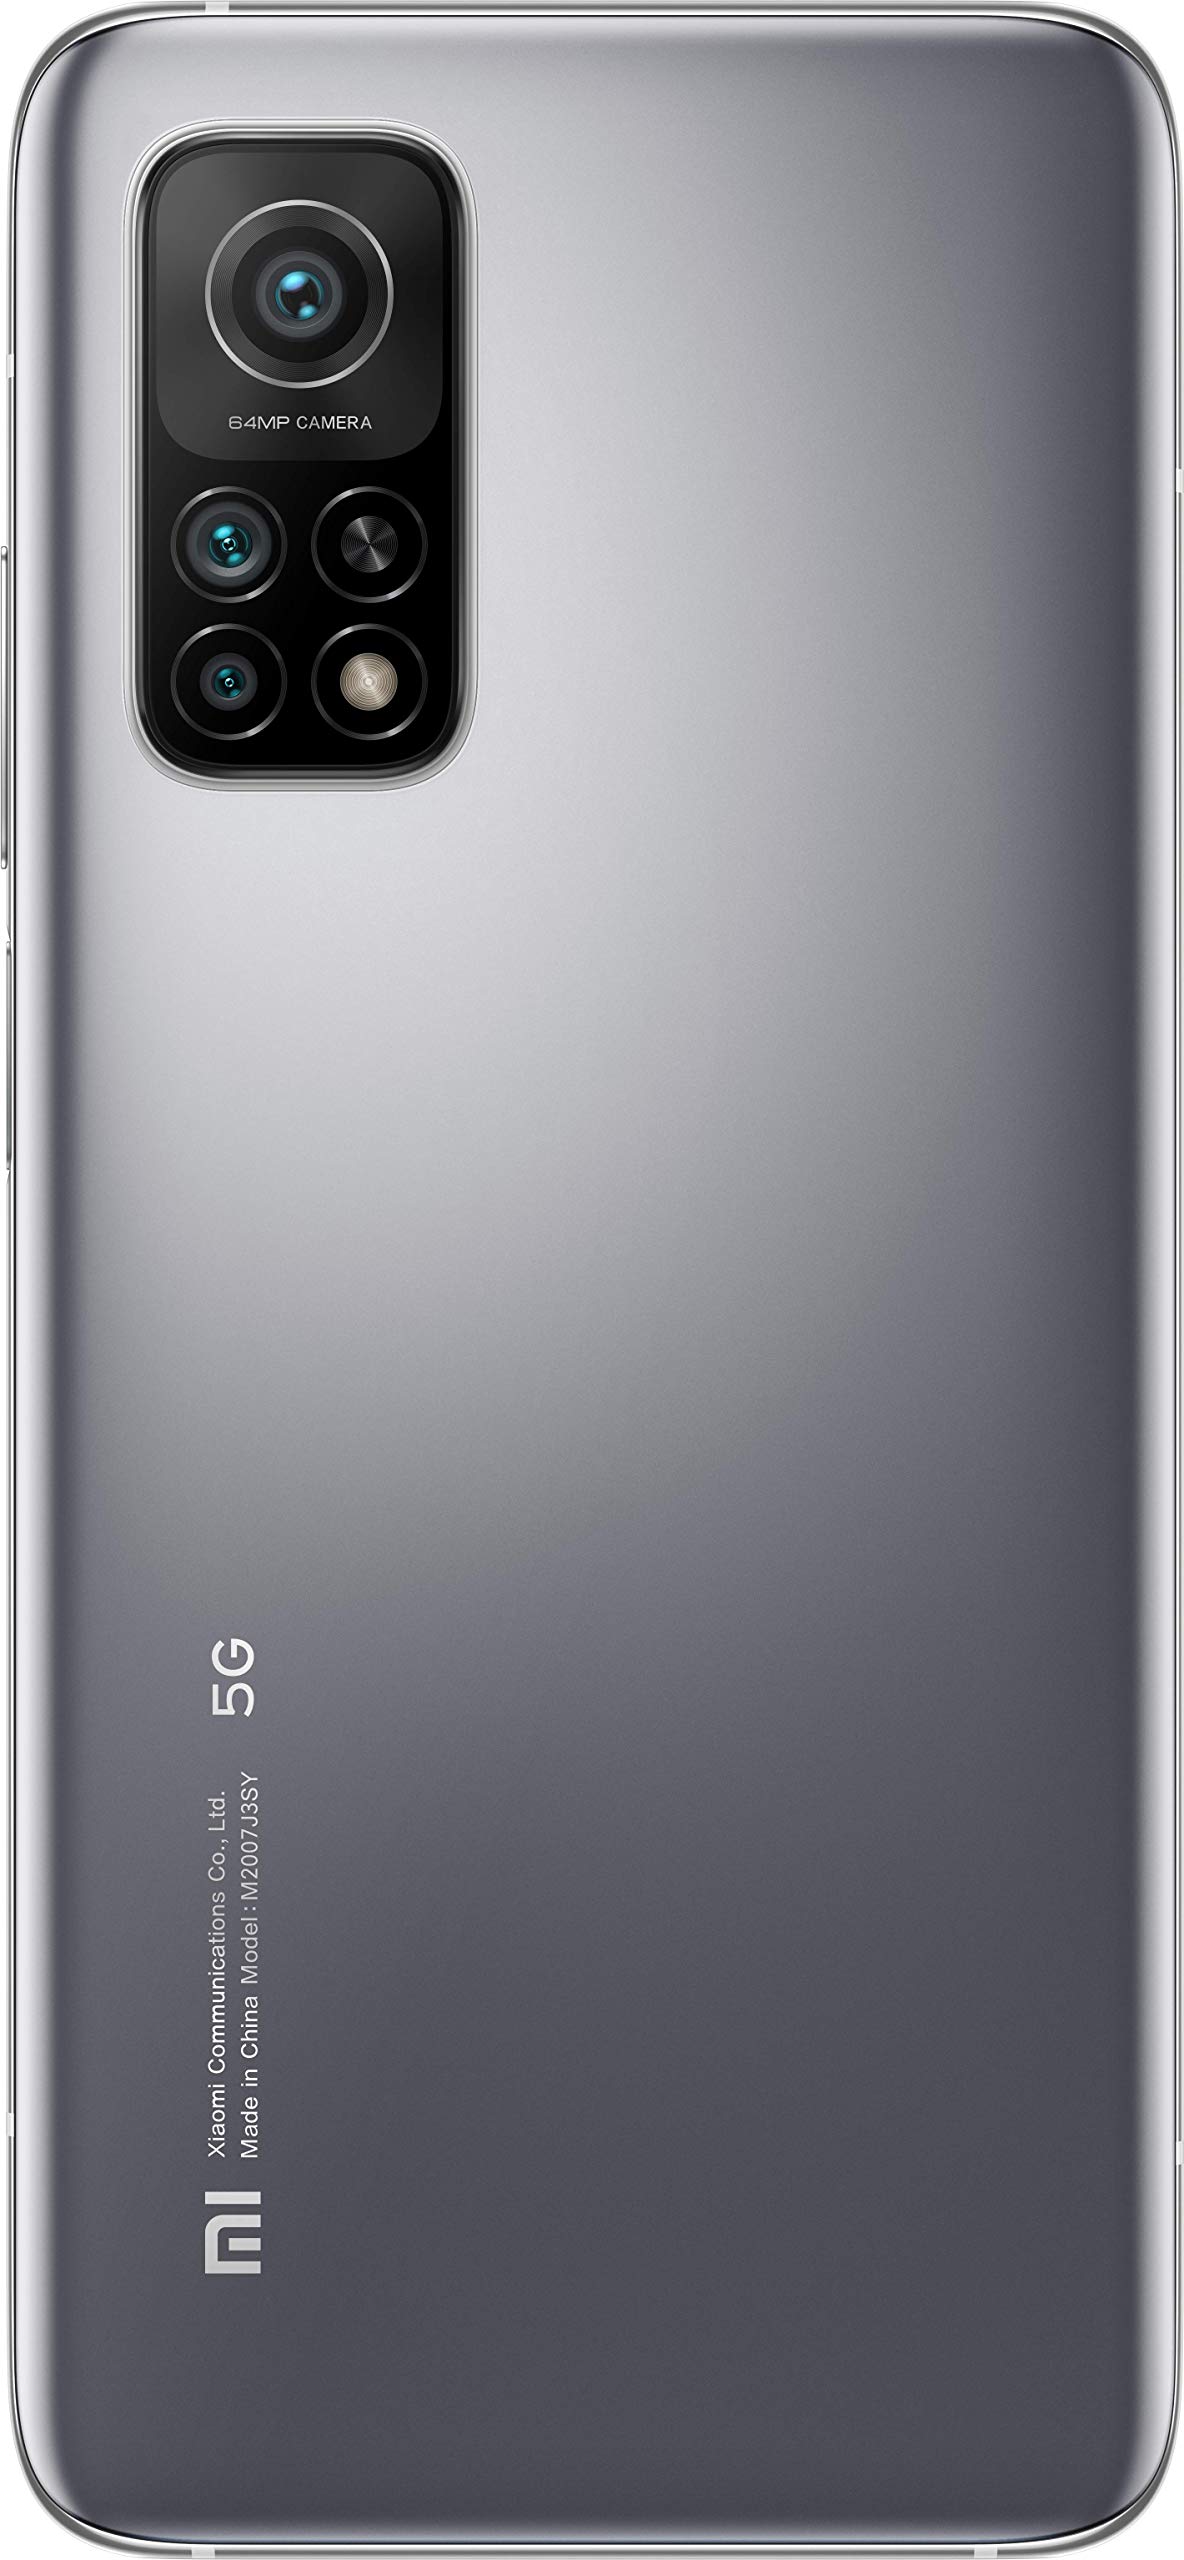 Xiaomi Mi 10T unlocked- Smartphone, 6 GB + 128 GB, Dual Sim, Alexa Hands-Free, Grigio (Lunar Silver)